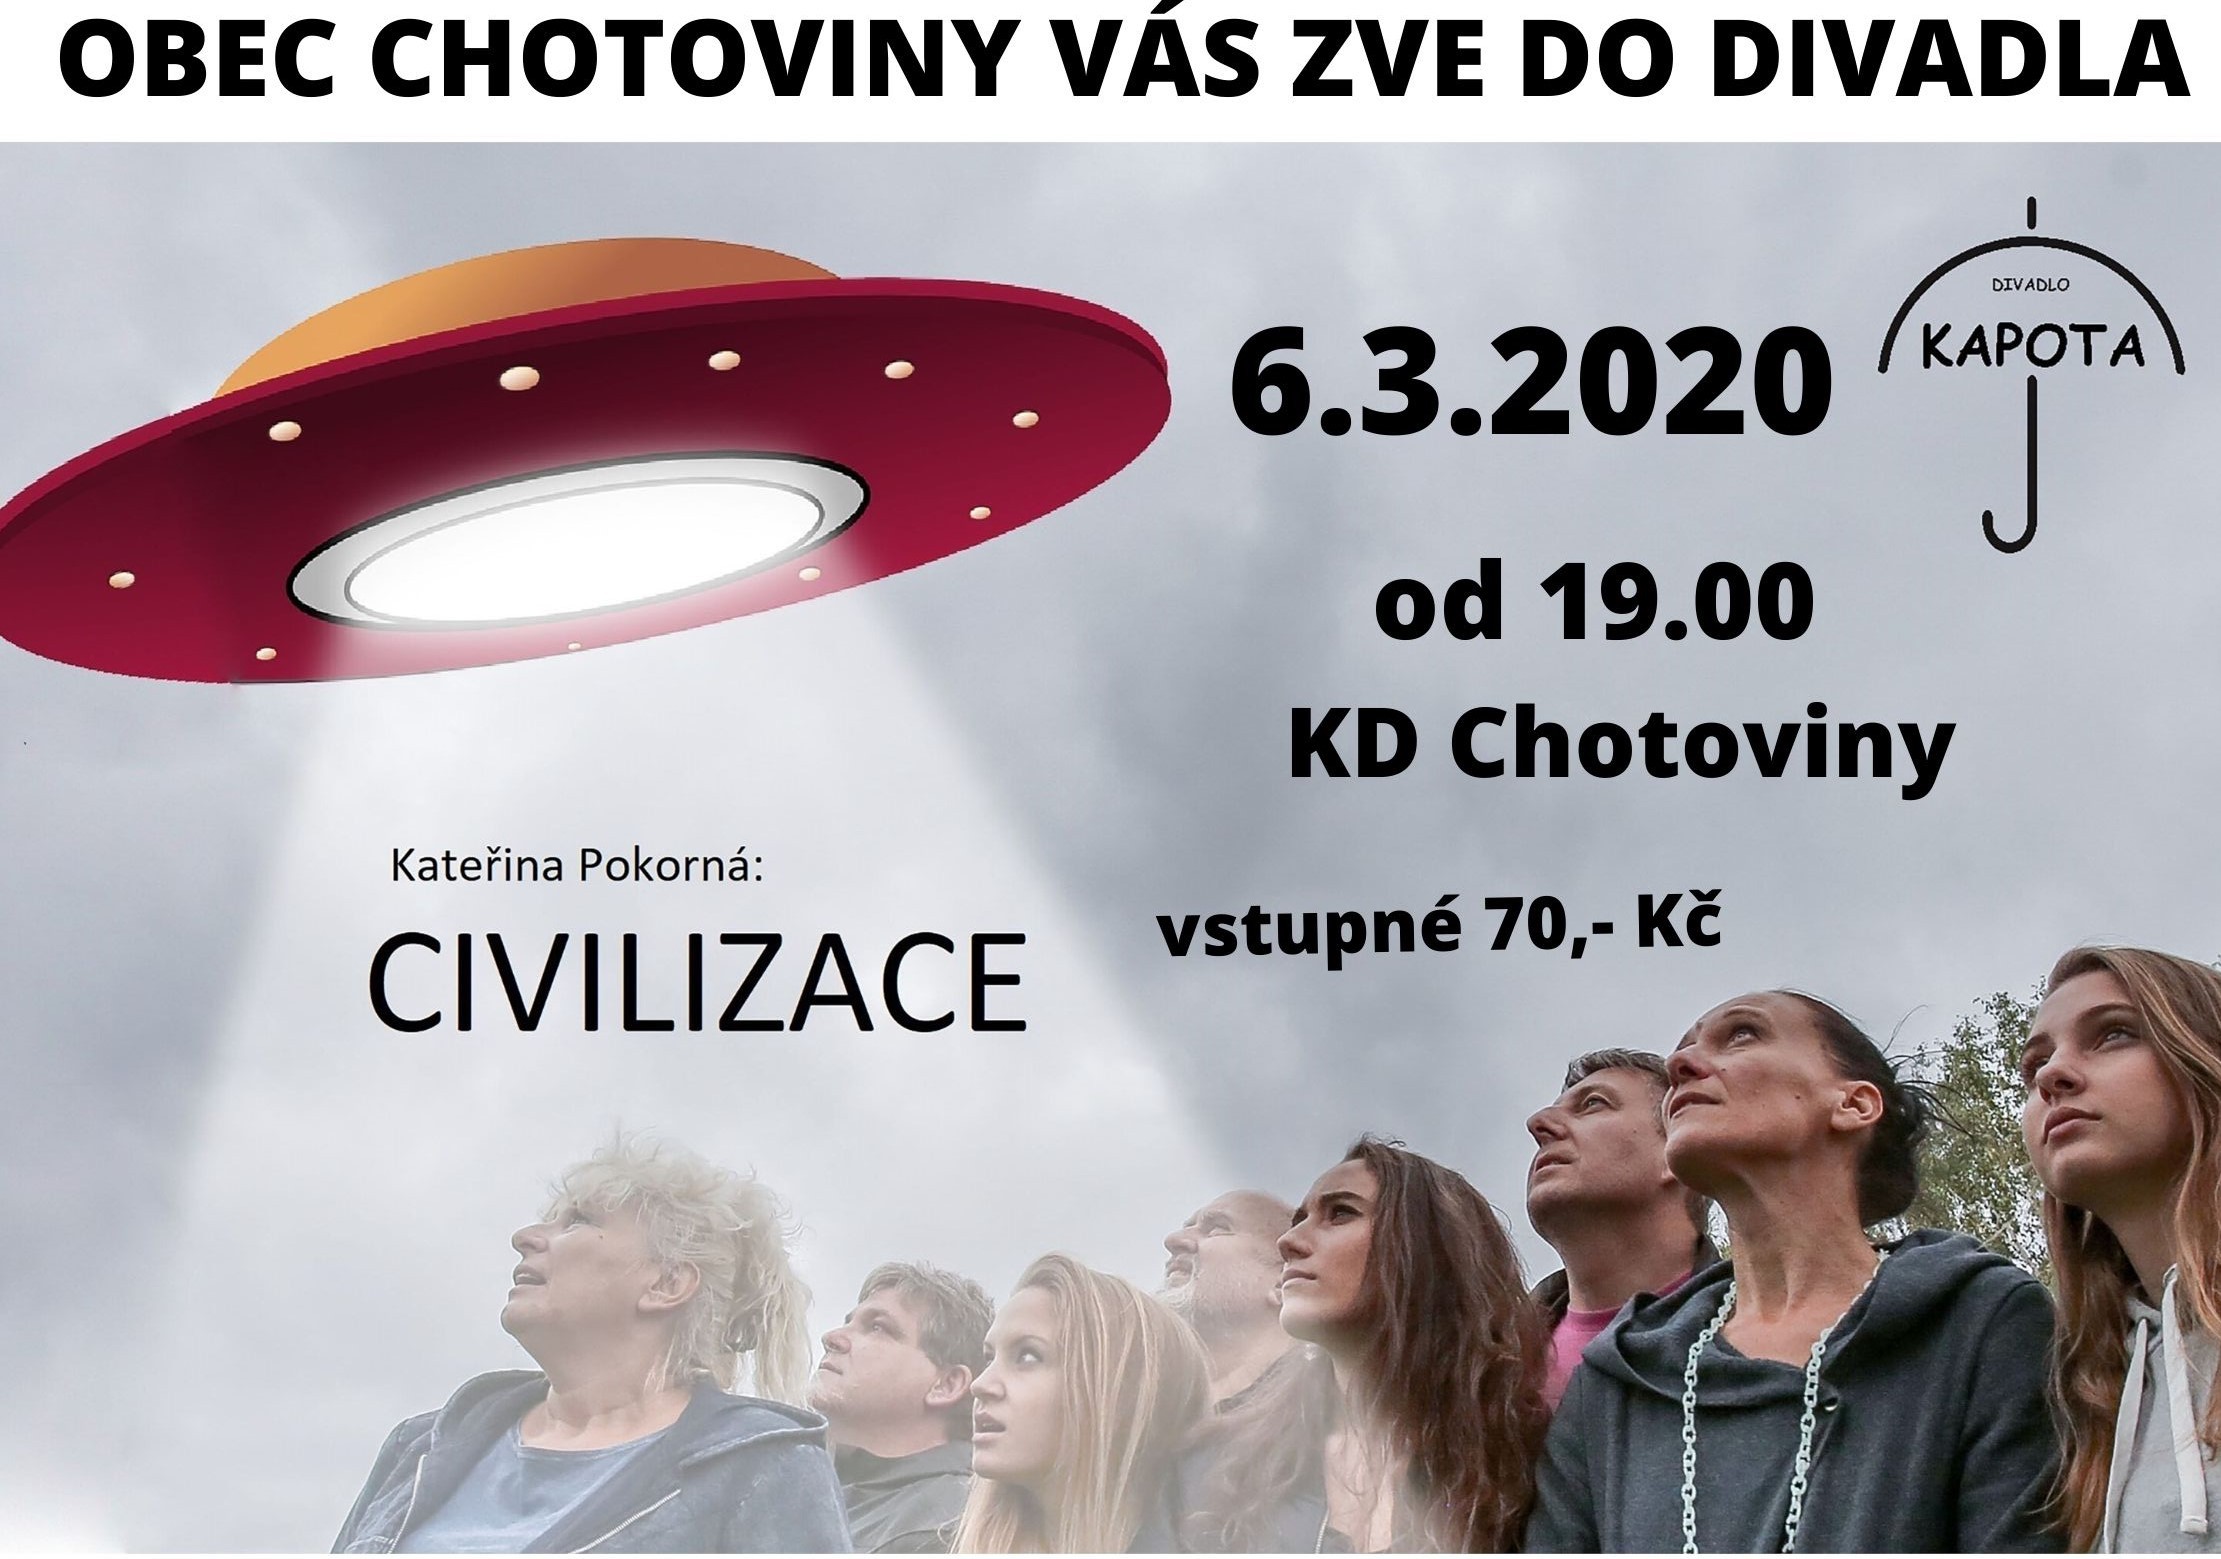 kapota---civilizace-6.3.2020-plakat-kopie.jpg